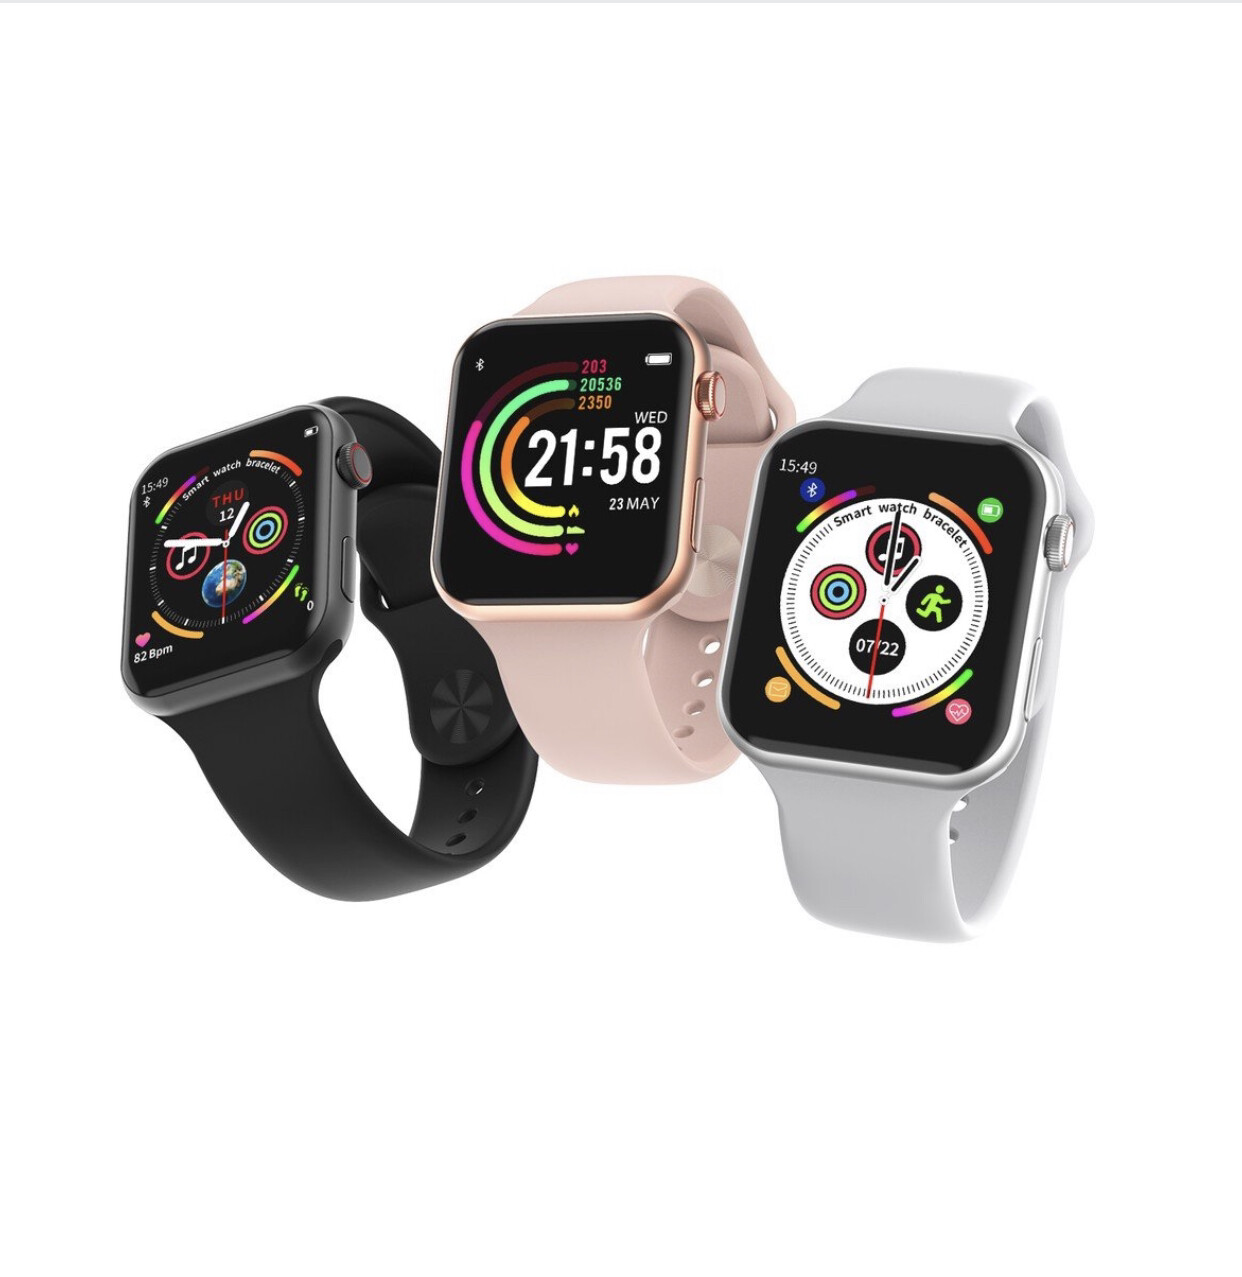 Shop Apple Watch Series 3 LTE in Zimbabwe